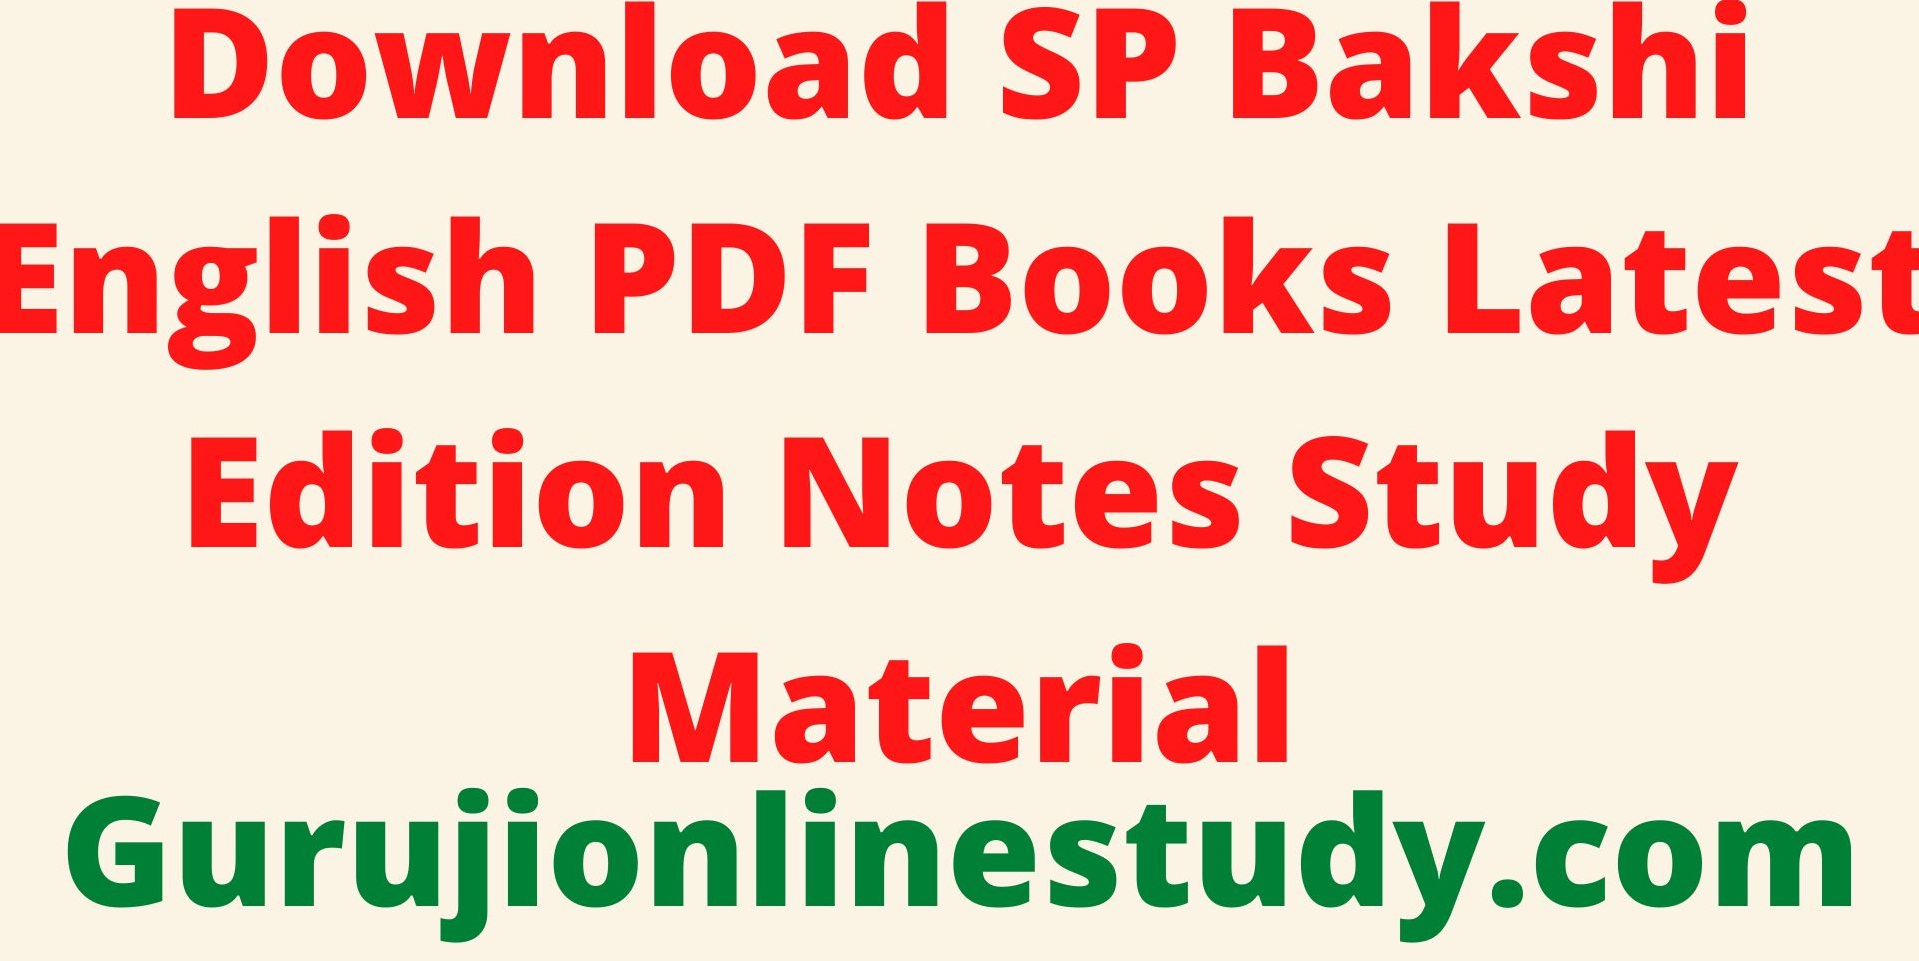 SP Bakshi English PDF